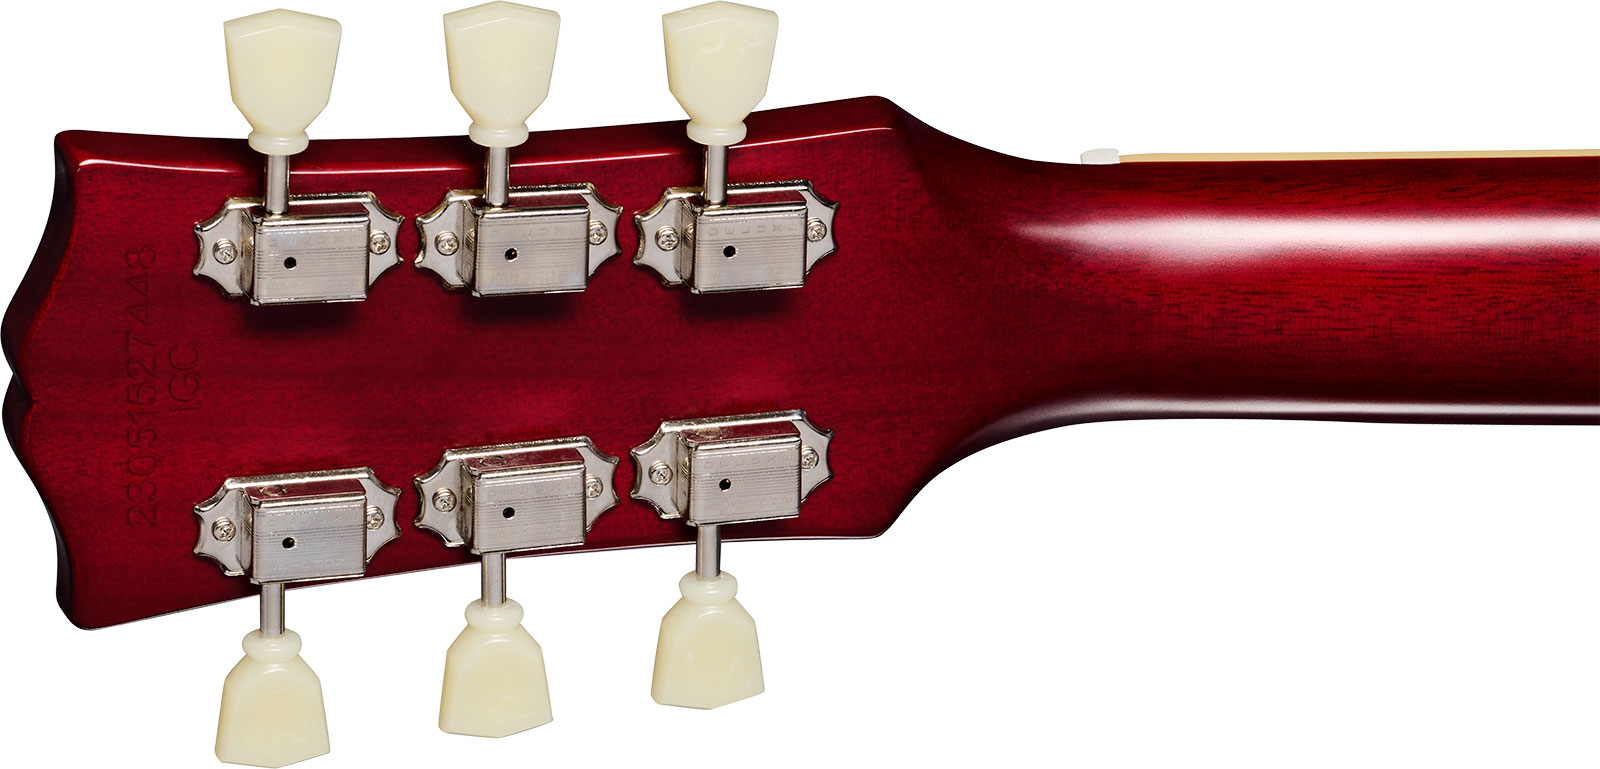 Epiphone 1959 Les Paul Standard Inspired By 2h Gibson Ht Lau - Vos Factory Burst - Enkel gesneden elektrische gitaar - Variation 4